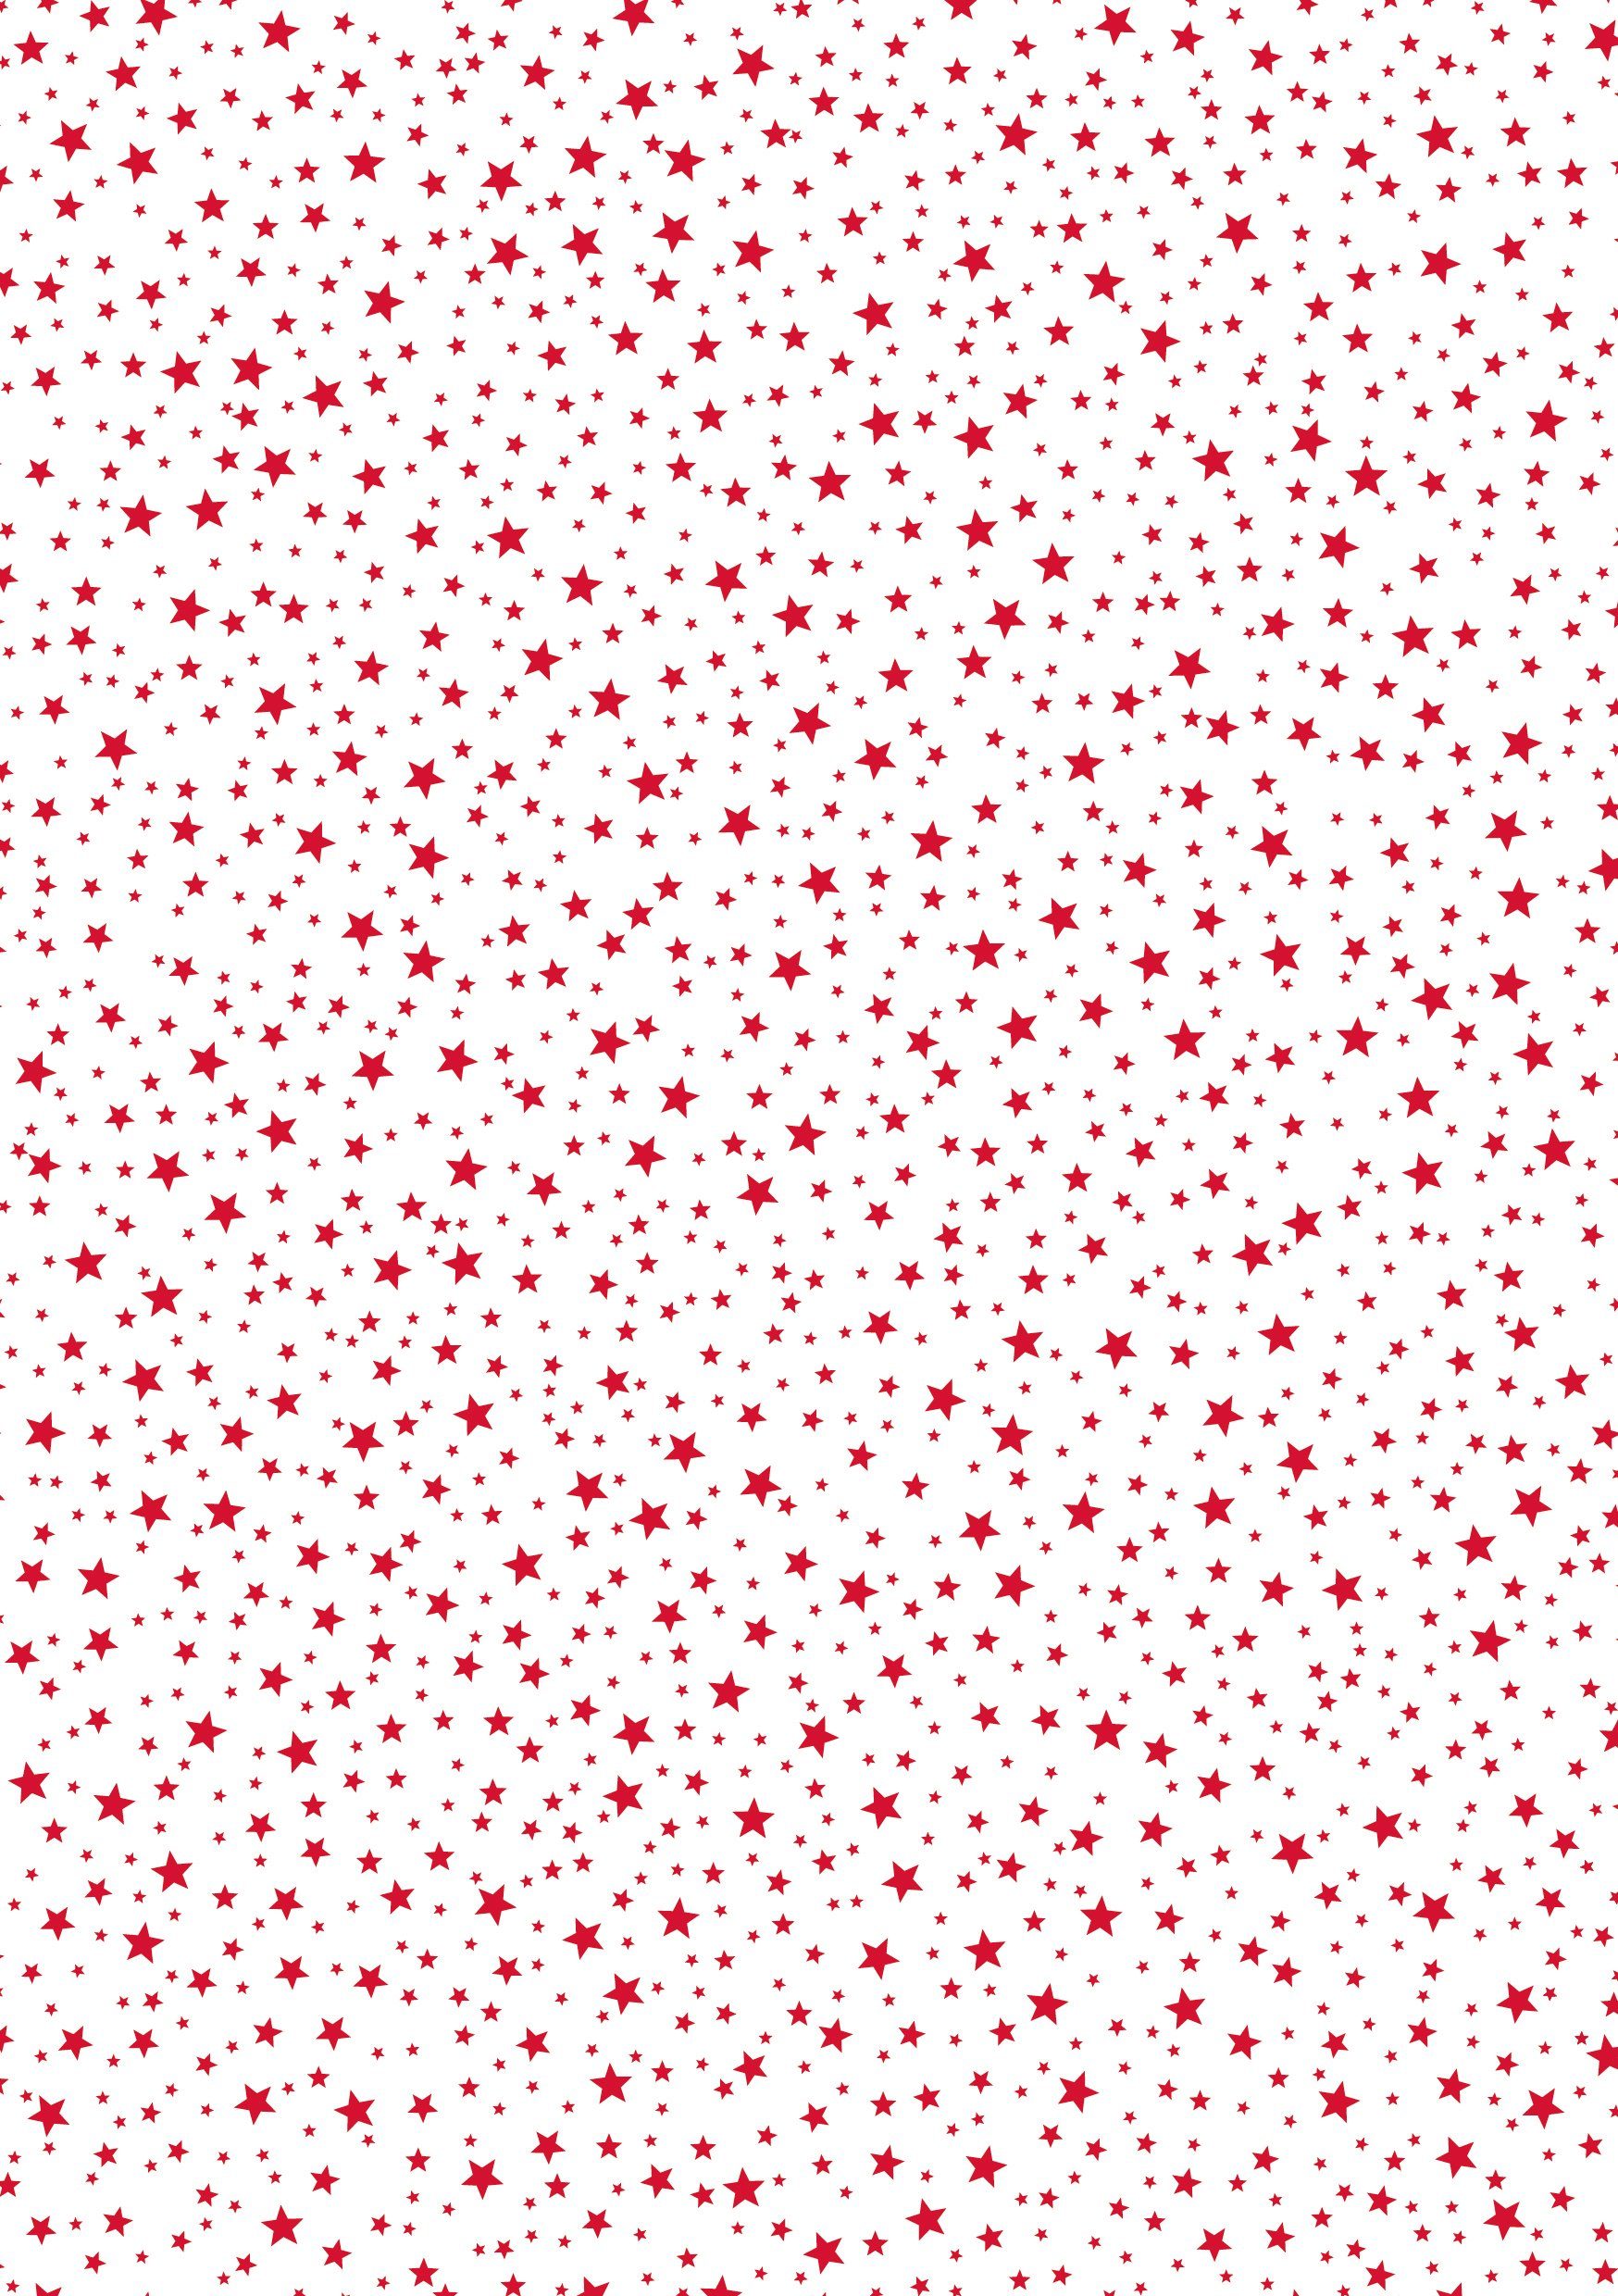 Motivpapier Mini-Sterne, cm x 70 50 Rot MarpaJansen cm